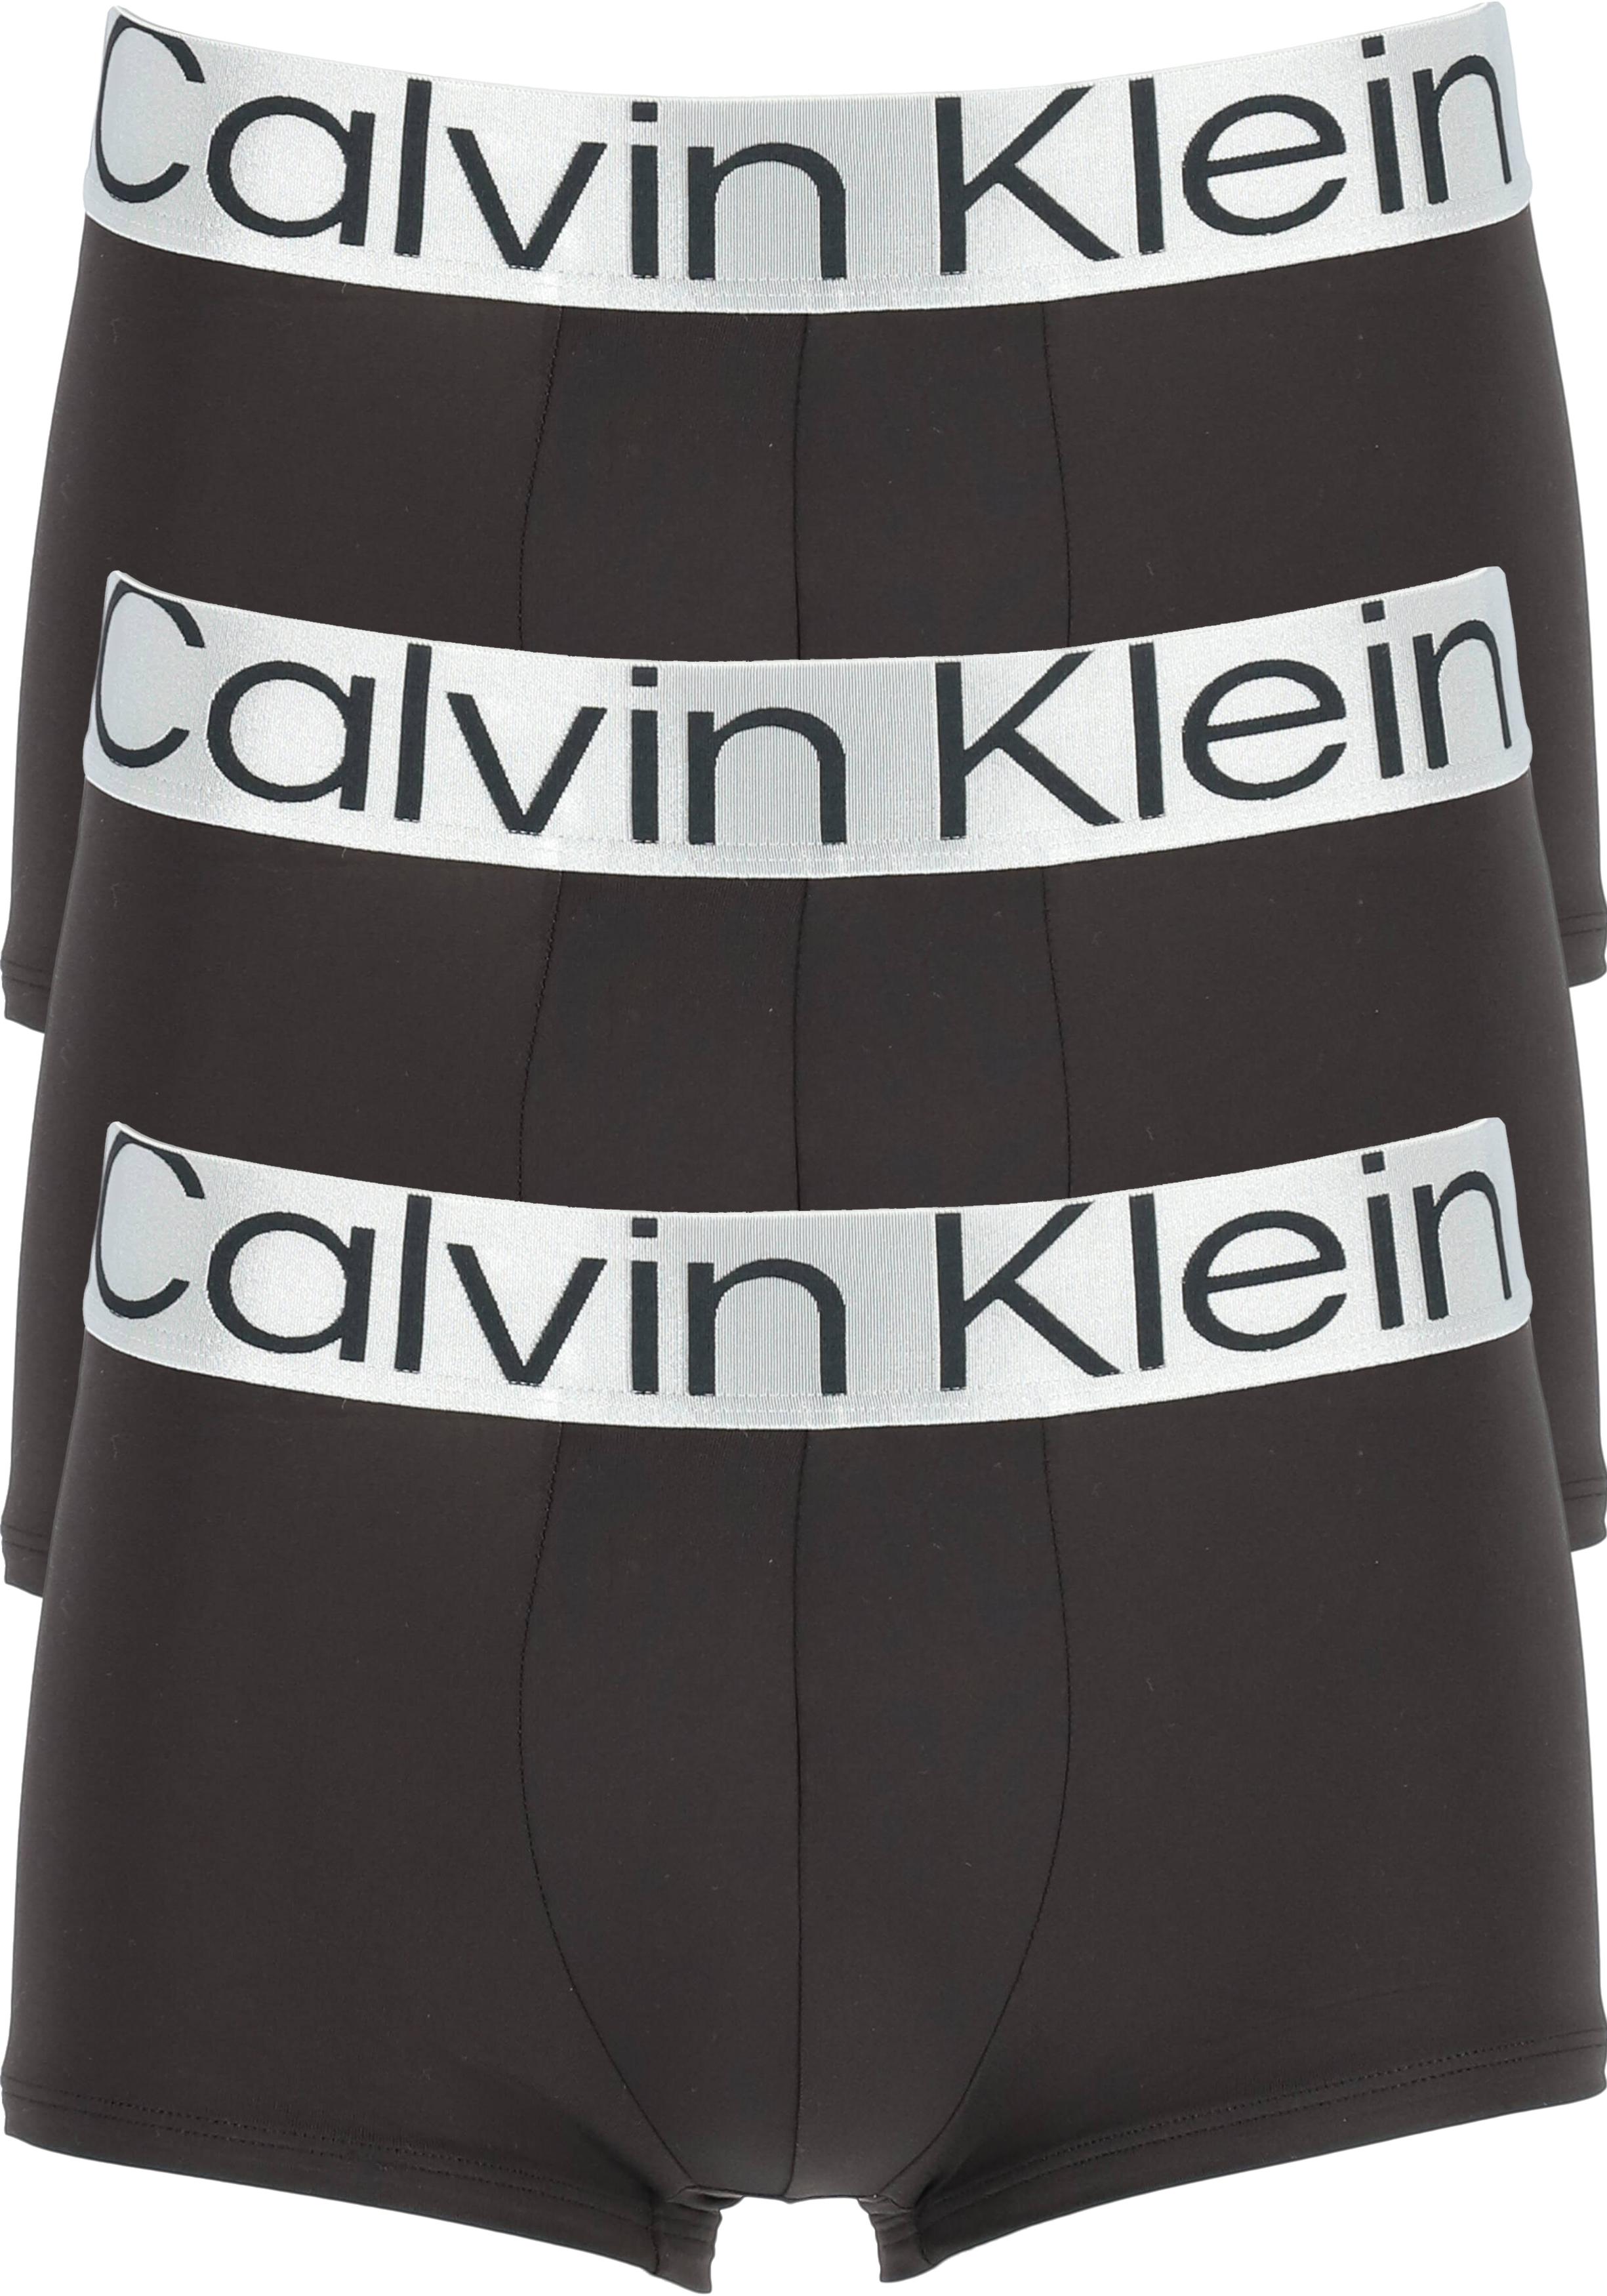 Calvin Klein low trunks microfiber lage heren boxers... Zomer SALE tot 70%